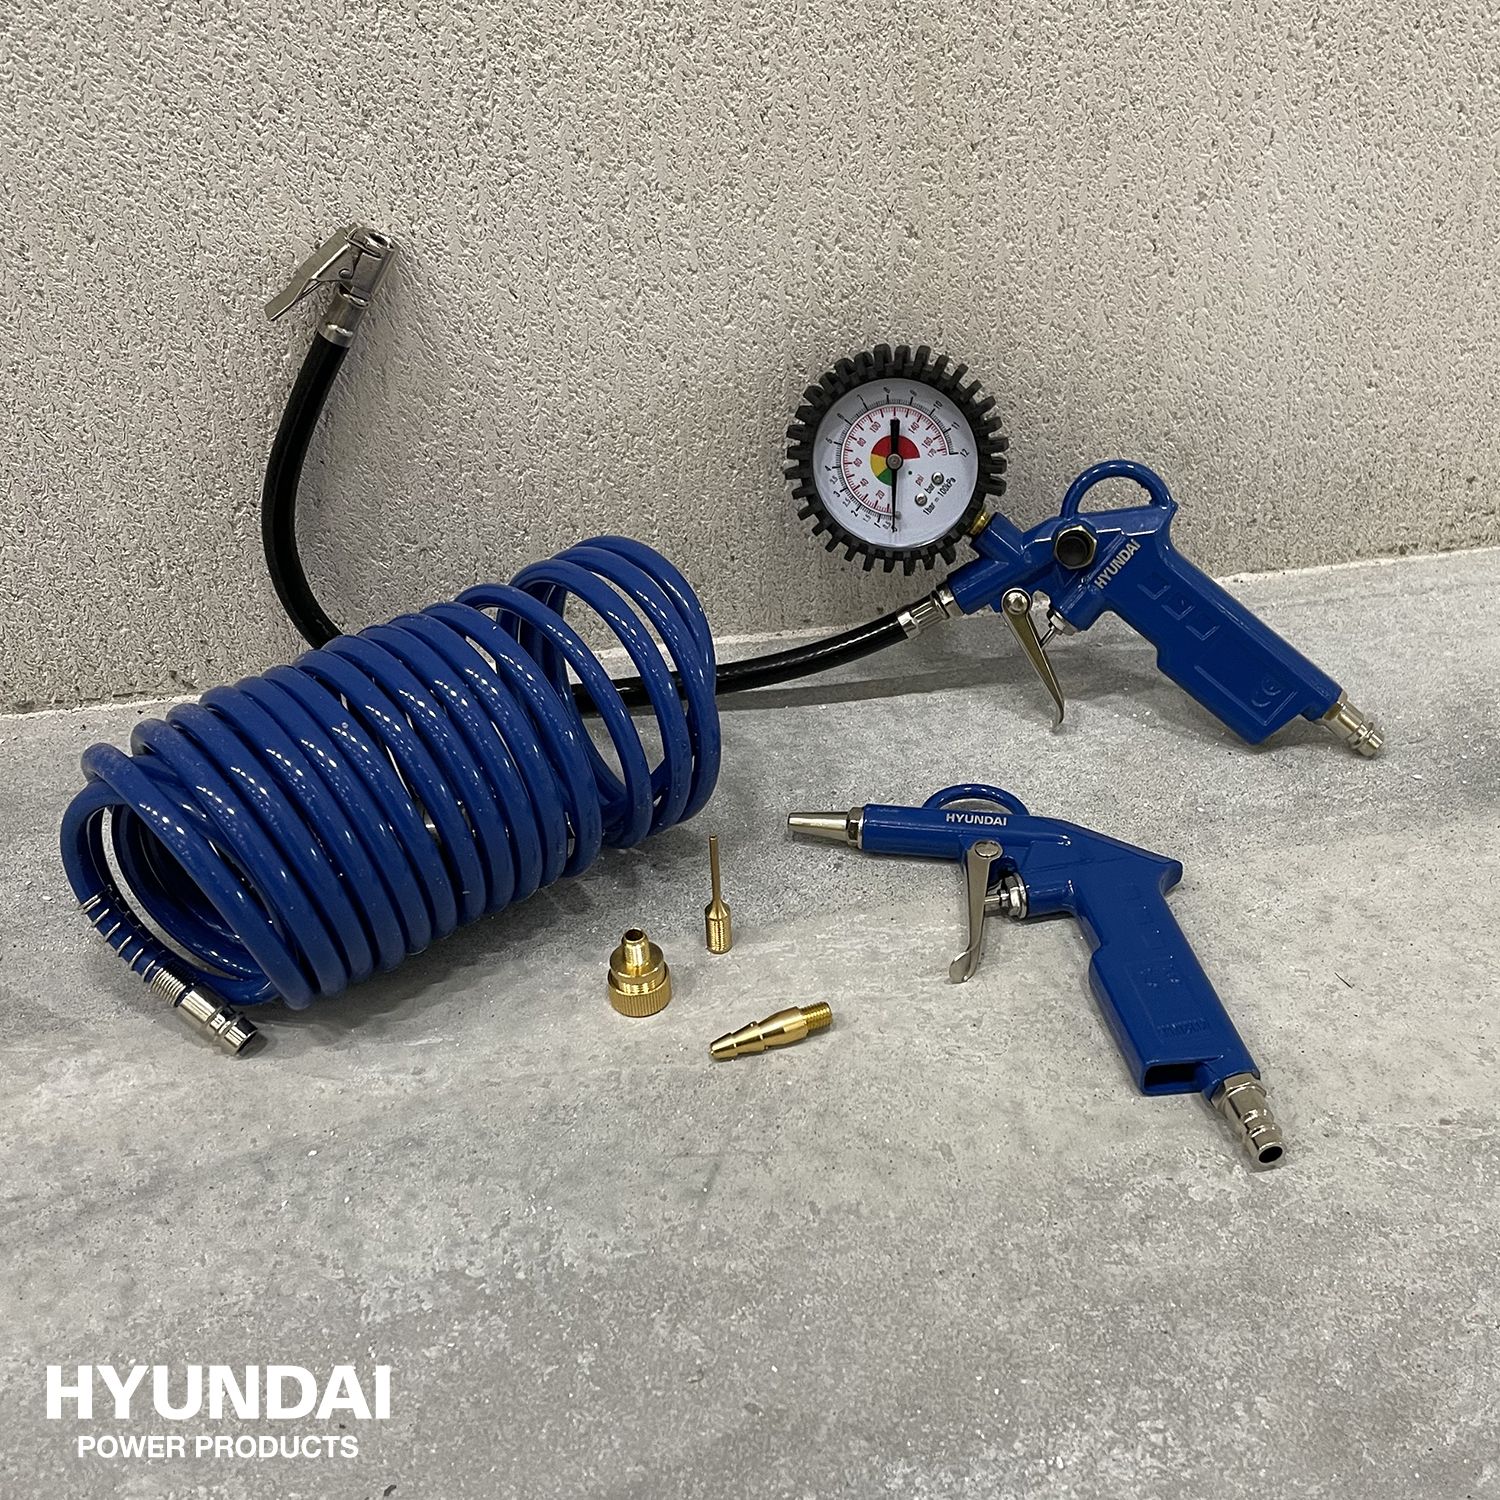 Hyundai compressoraccessoires 6x